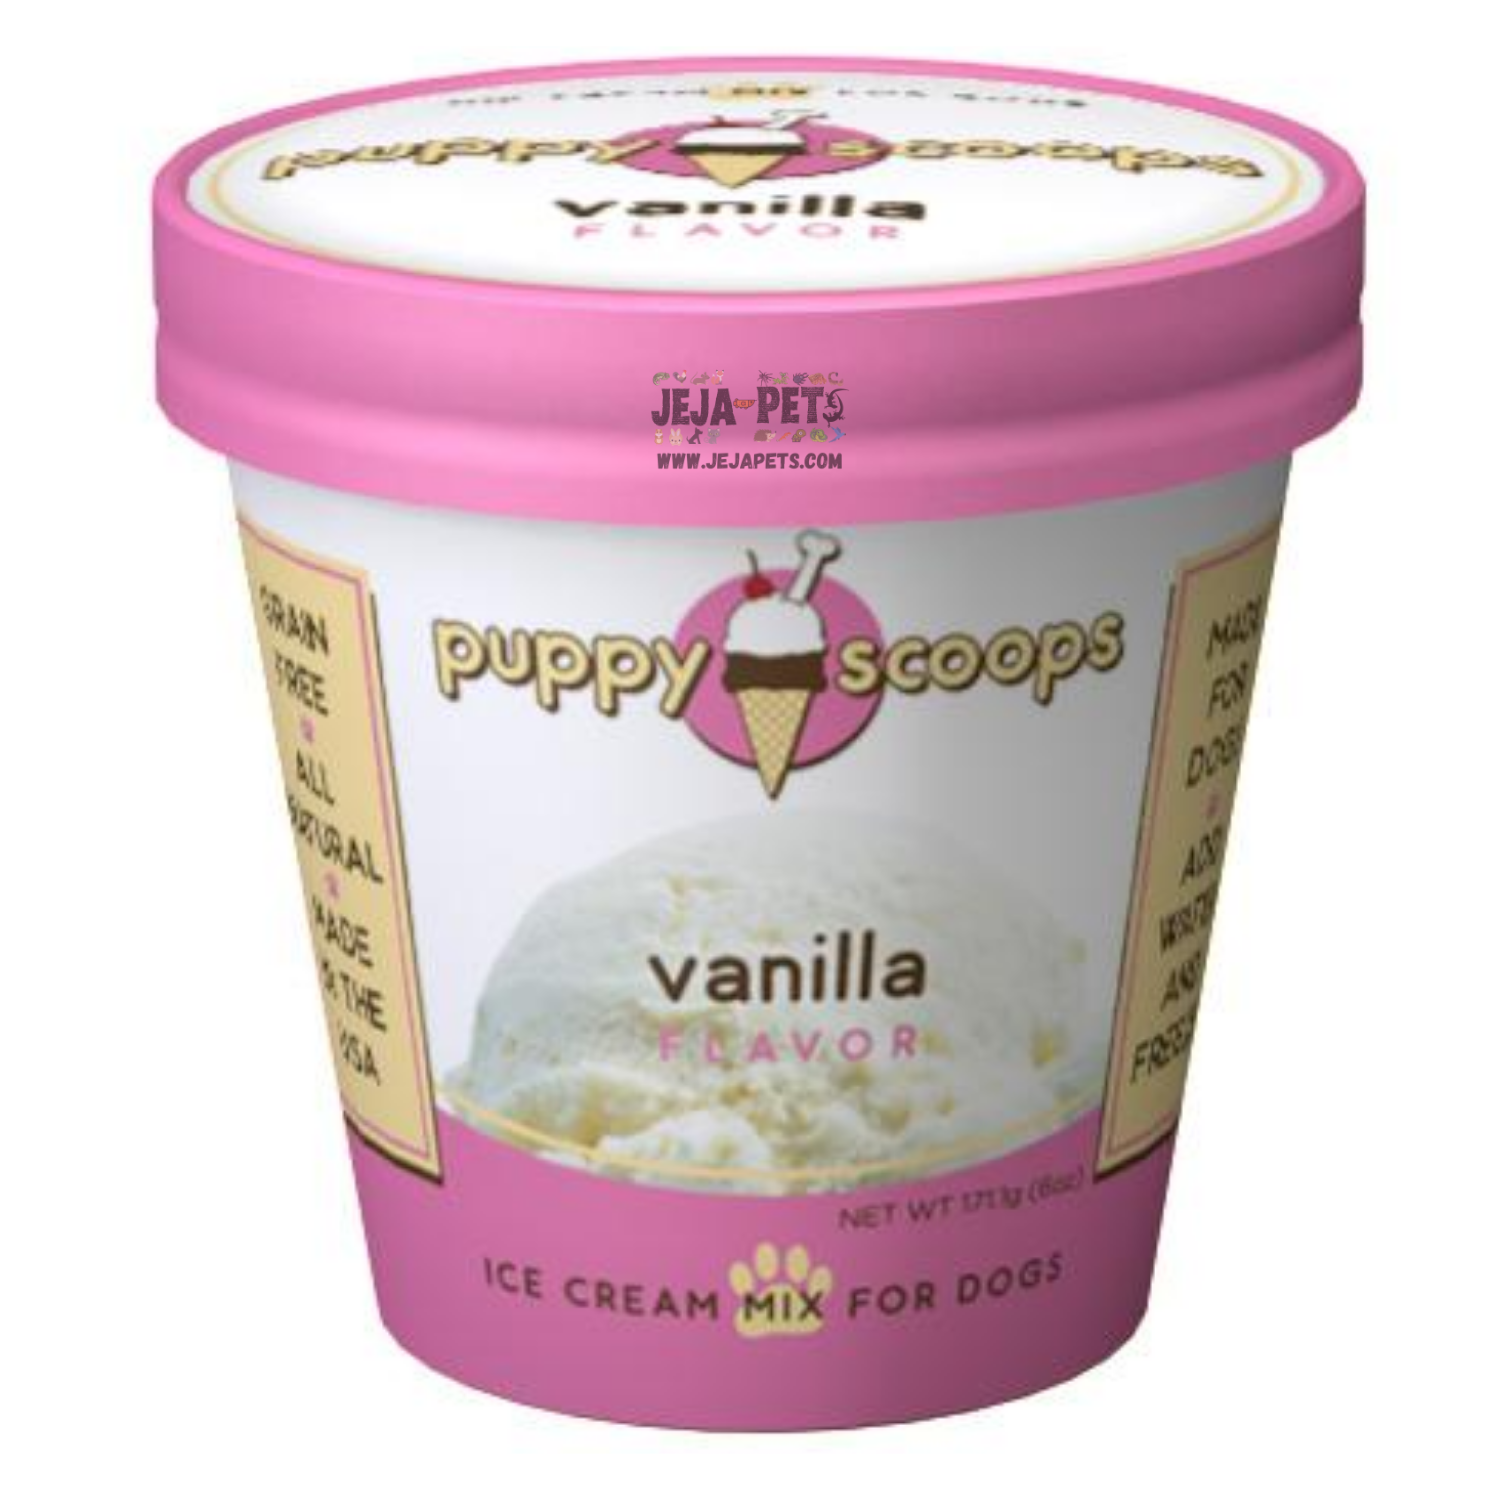 [DISCONTINUED] Puppy Cake Puppy Scoops Ice Cream Mix (Vanilla) - 65g / 130g